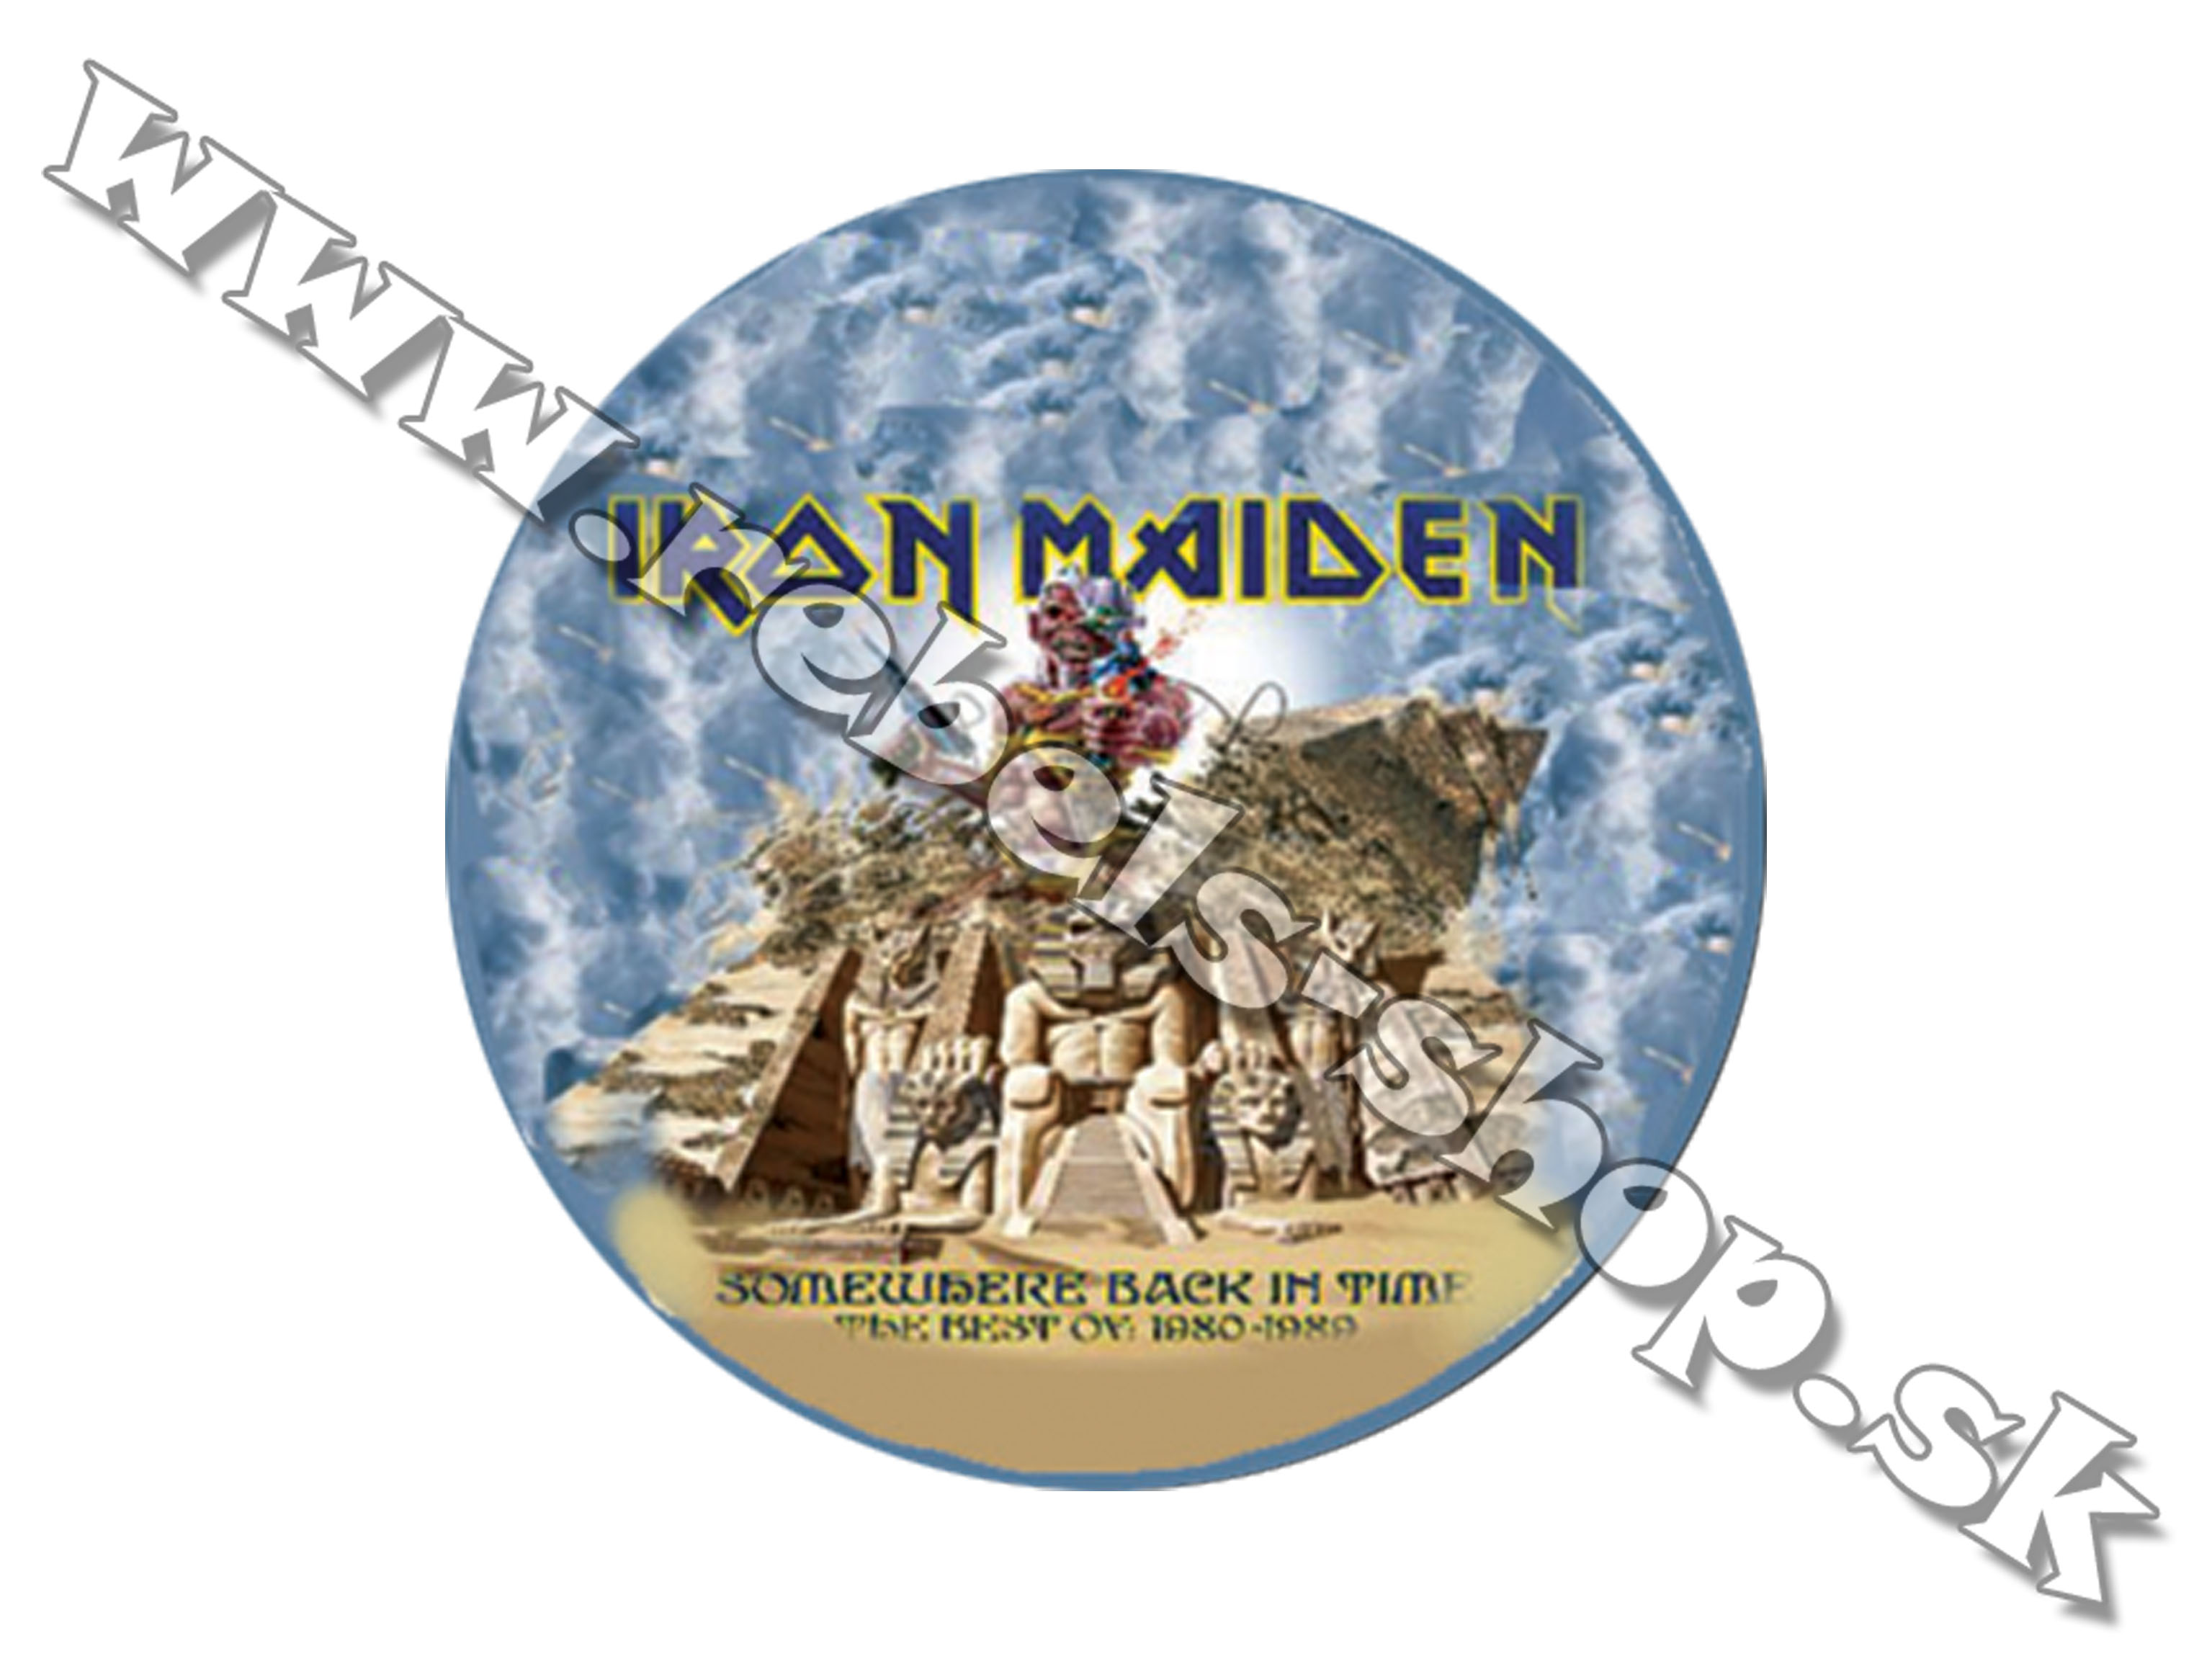 Odznak "Iron Maiden"